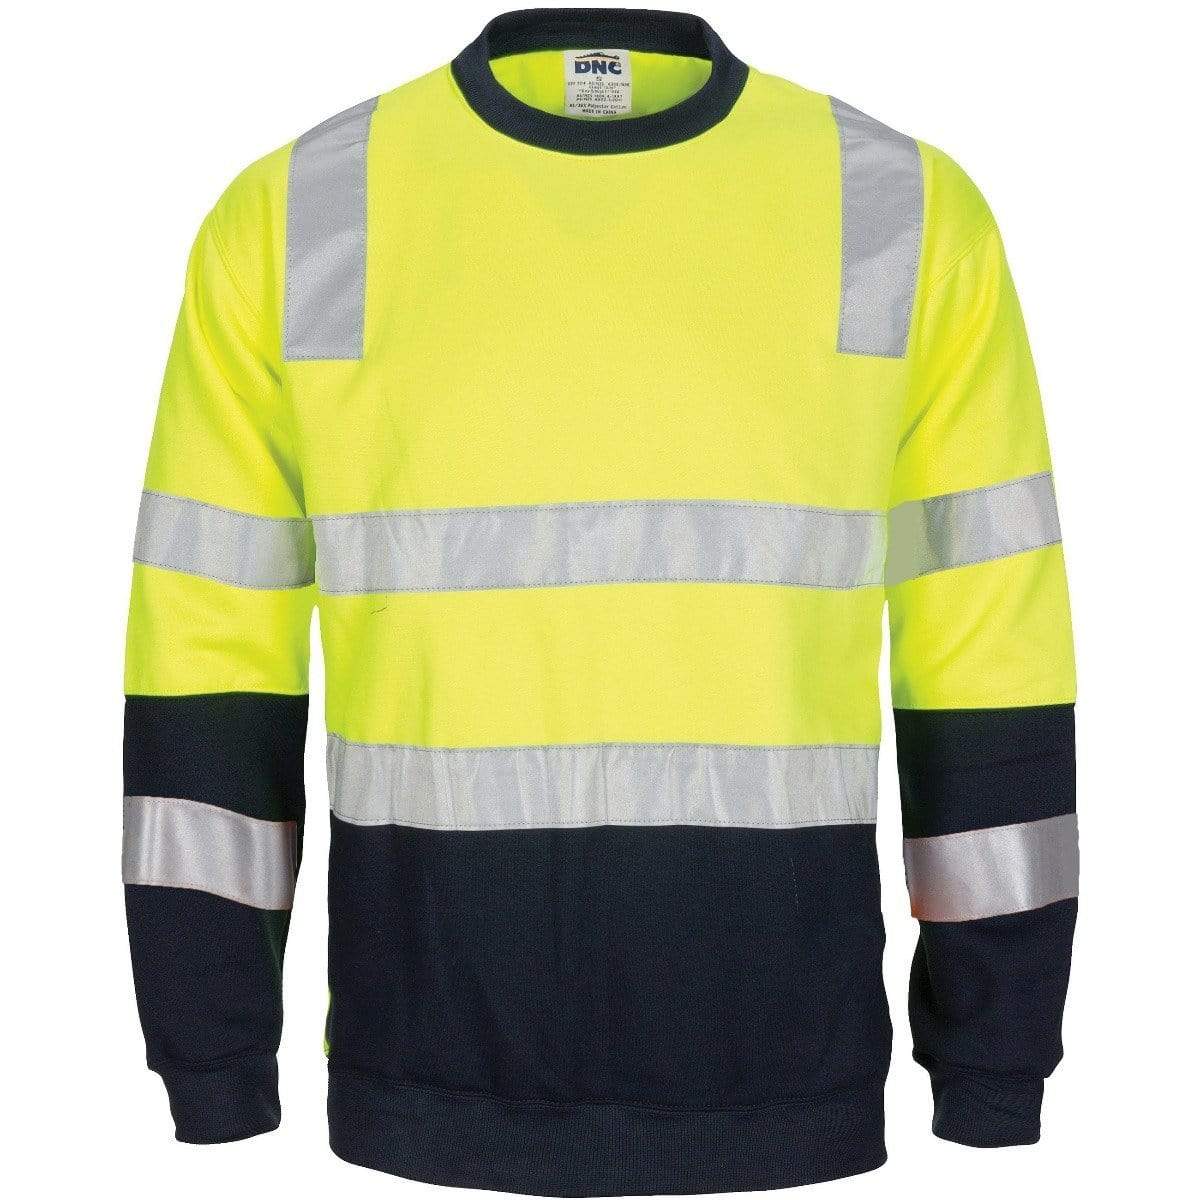 Dnc Workwear Hi-vis 2 Tone, Crew-neck Fleecy Sweatshirt - 3723 Work Wear DNC Workwear Yellow/Navy XS 